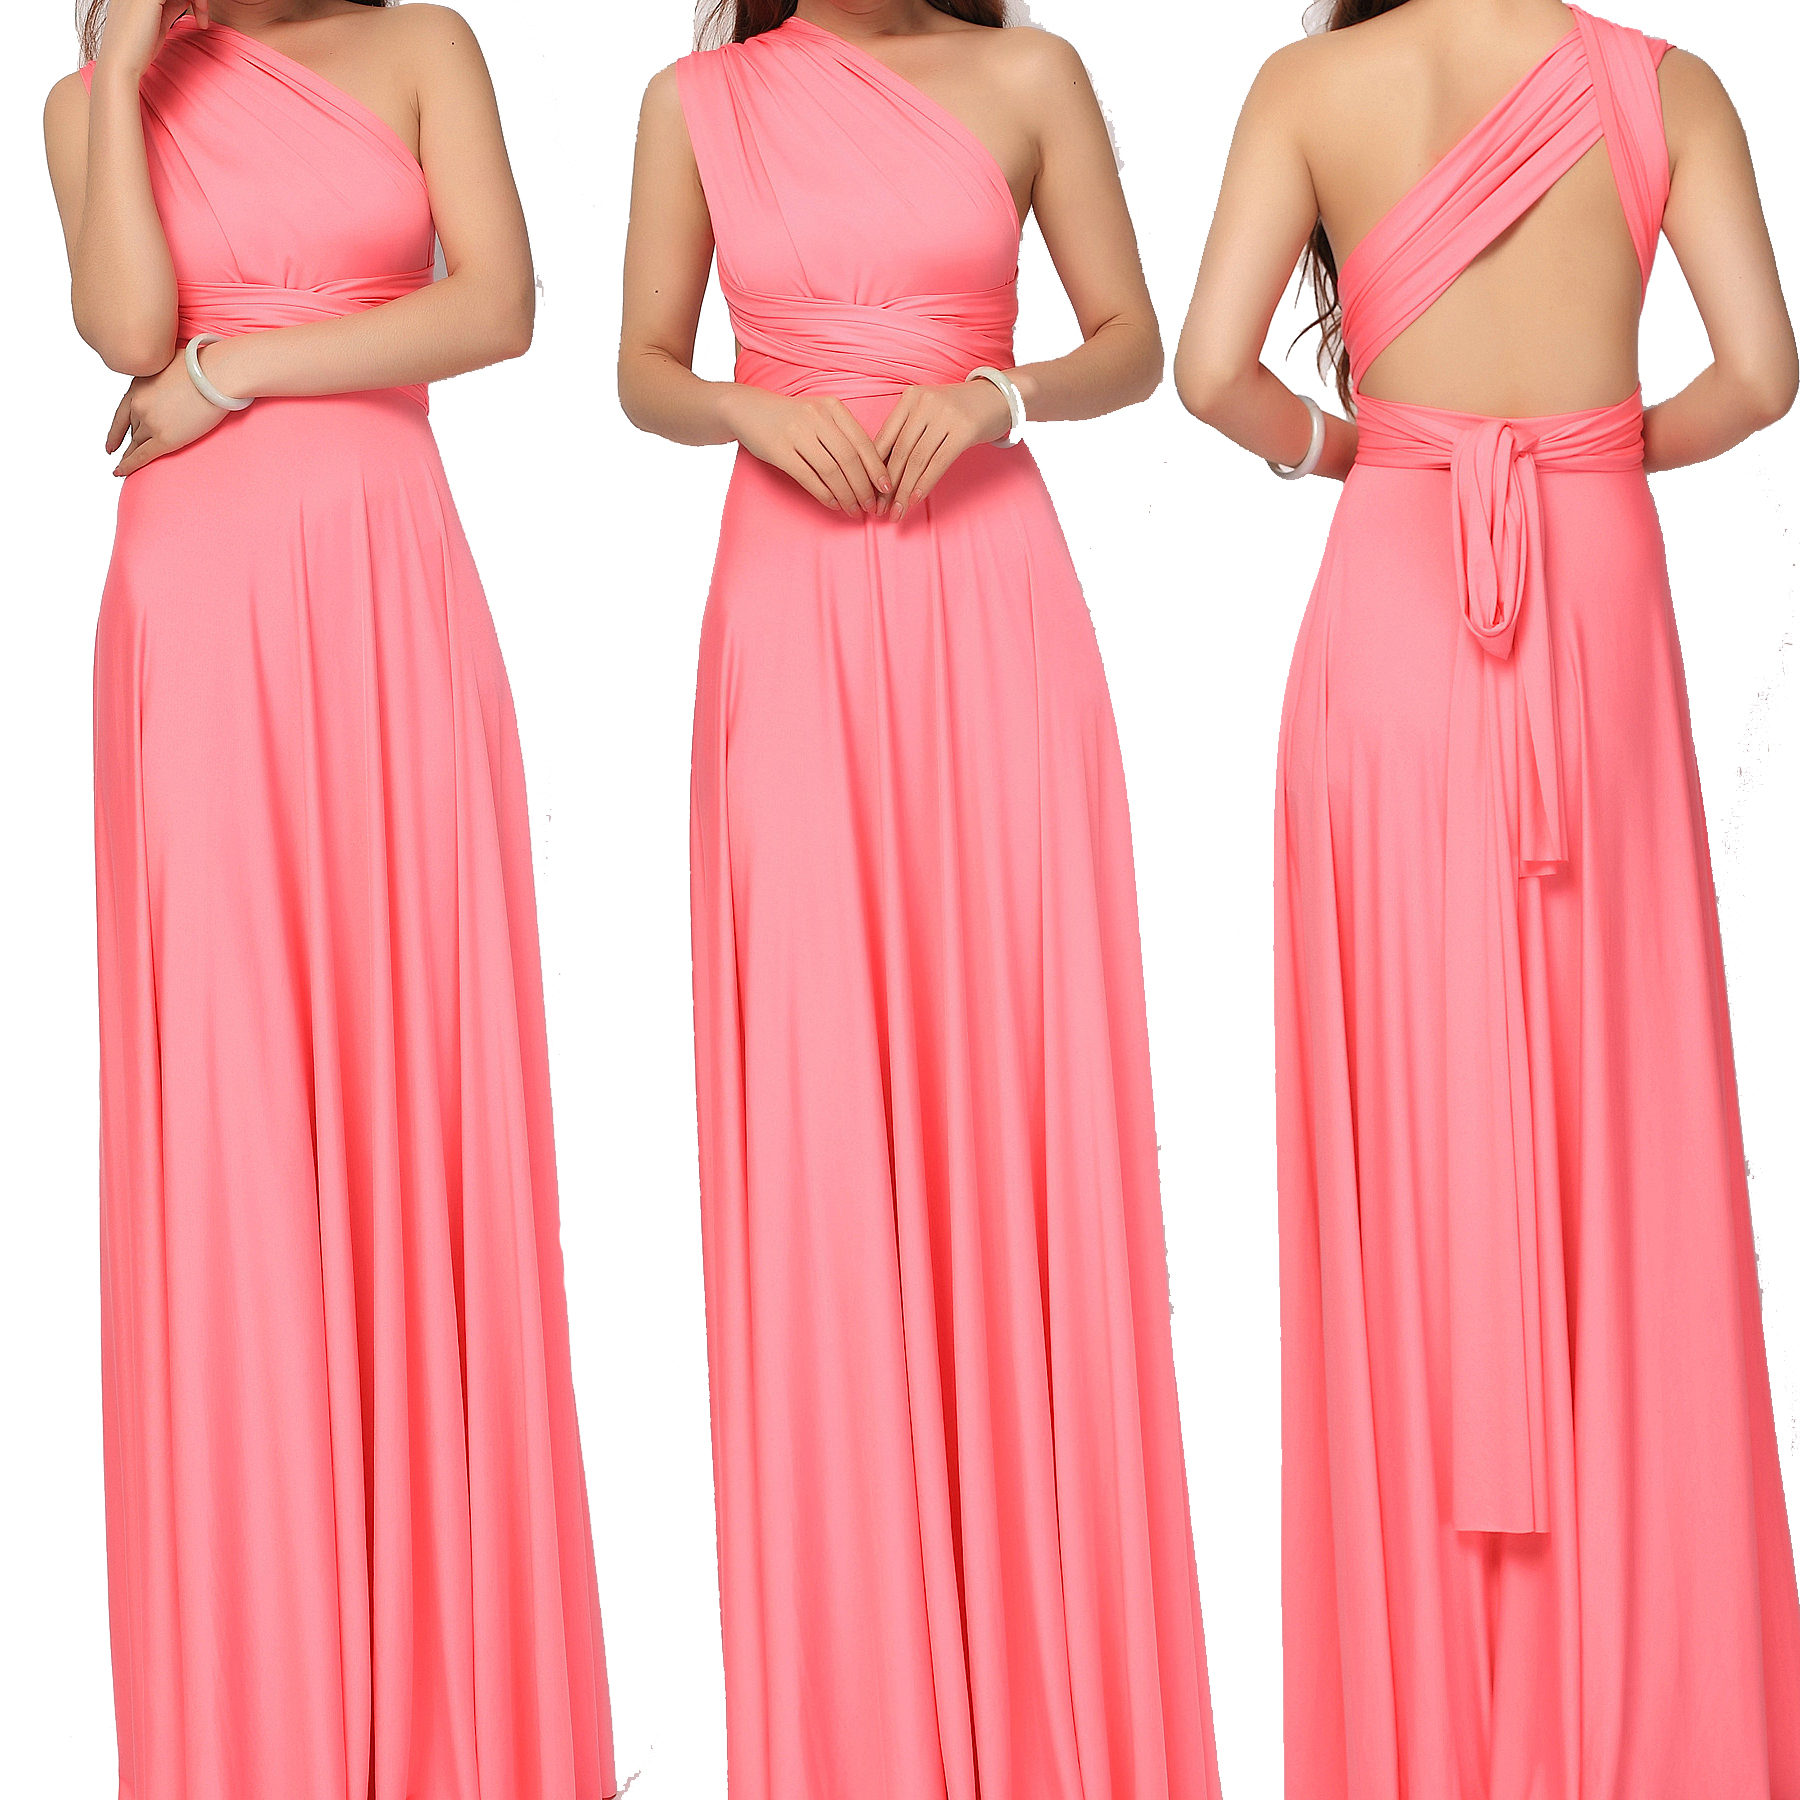 pink infinity dress